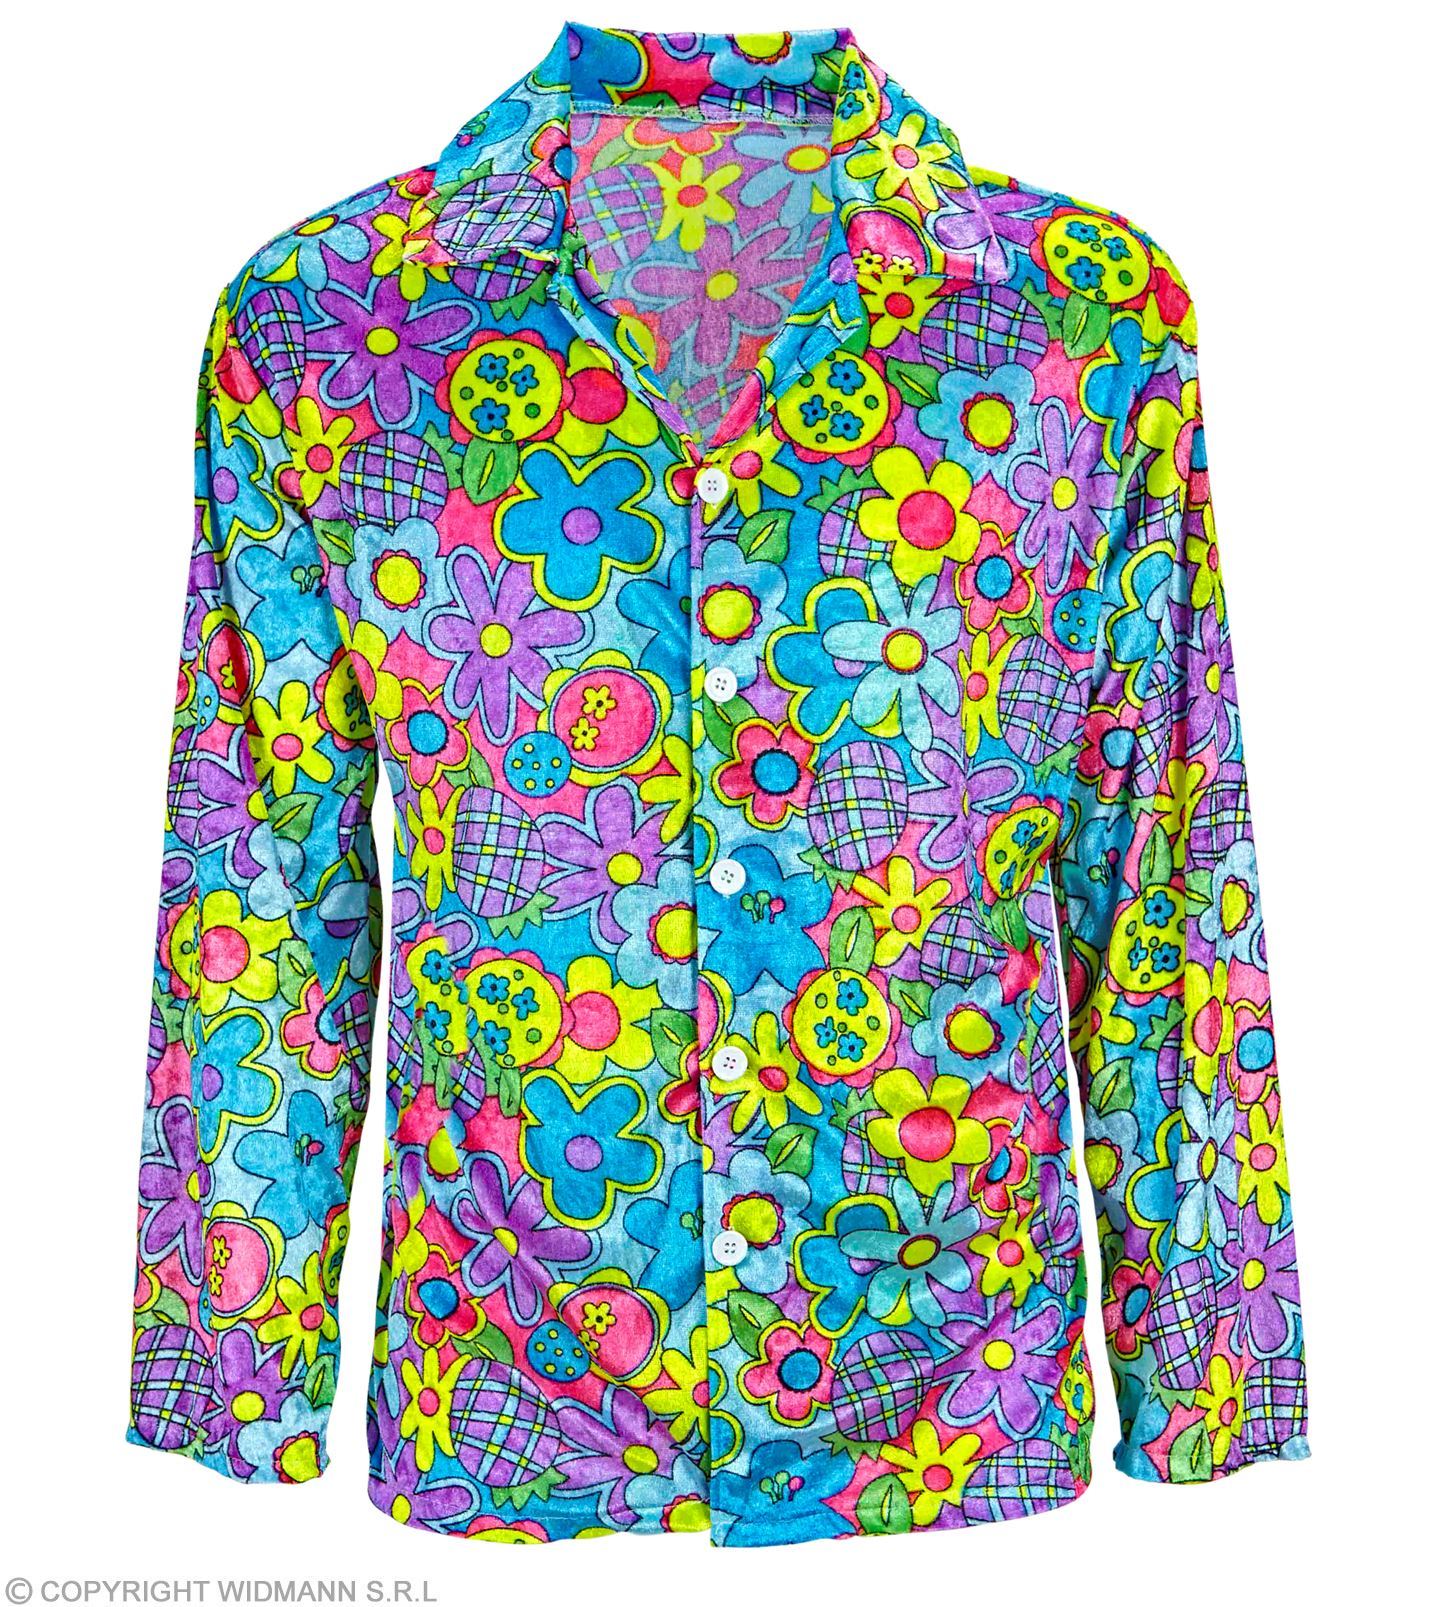 galop Wiskundige Arbitrage Flower power shirt voor mannen Hippie blouse voor ...